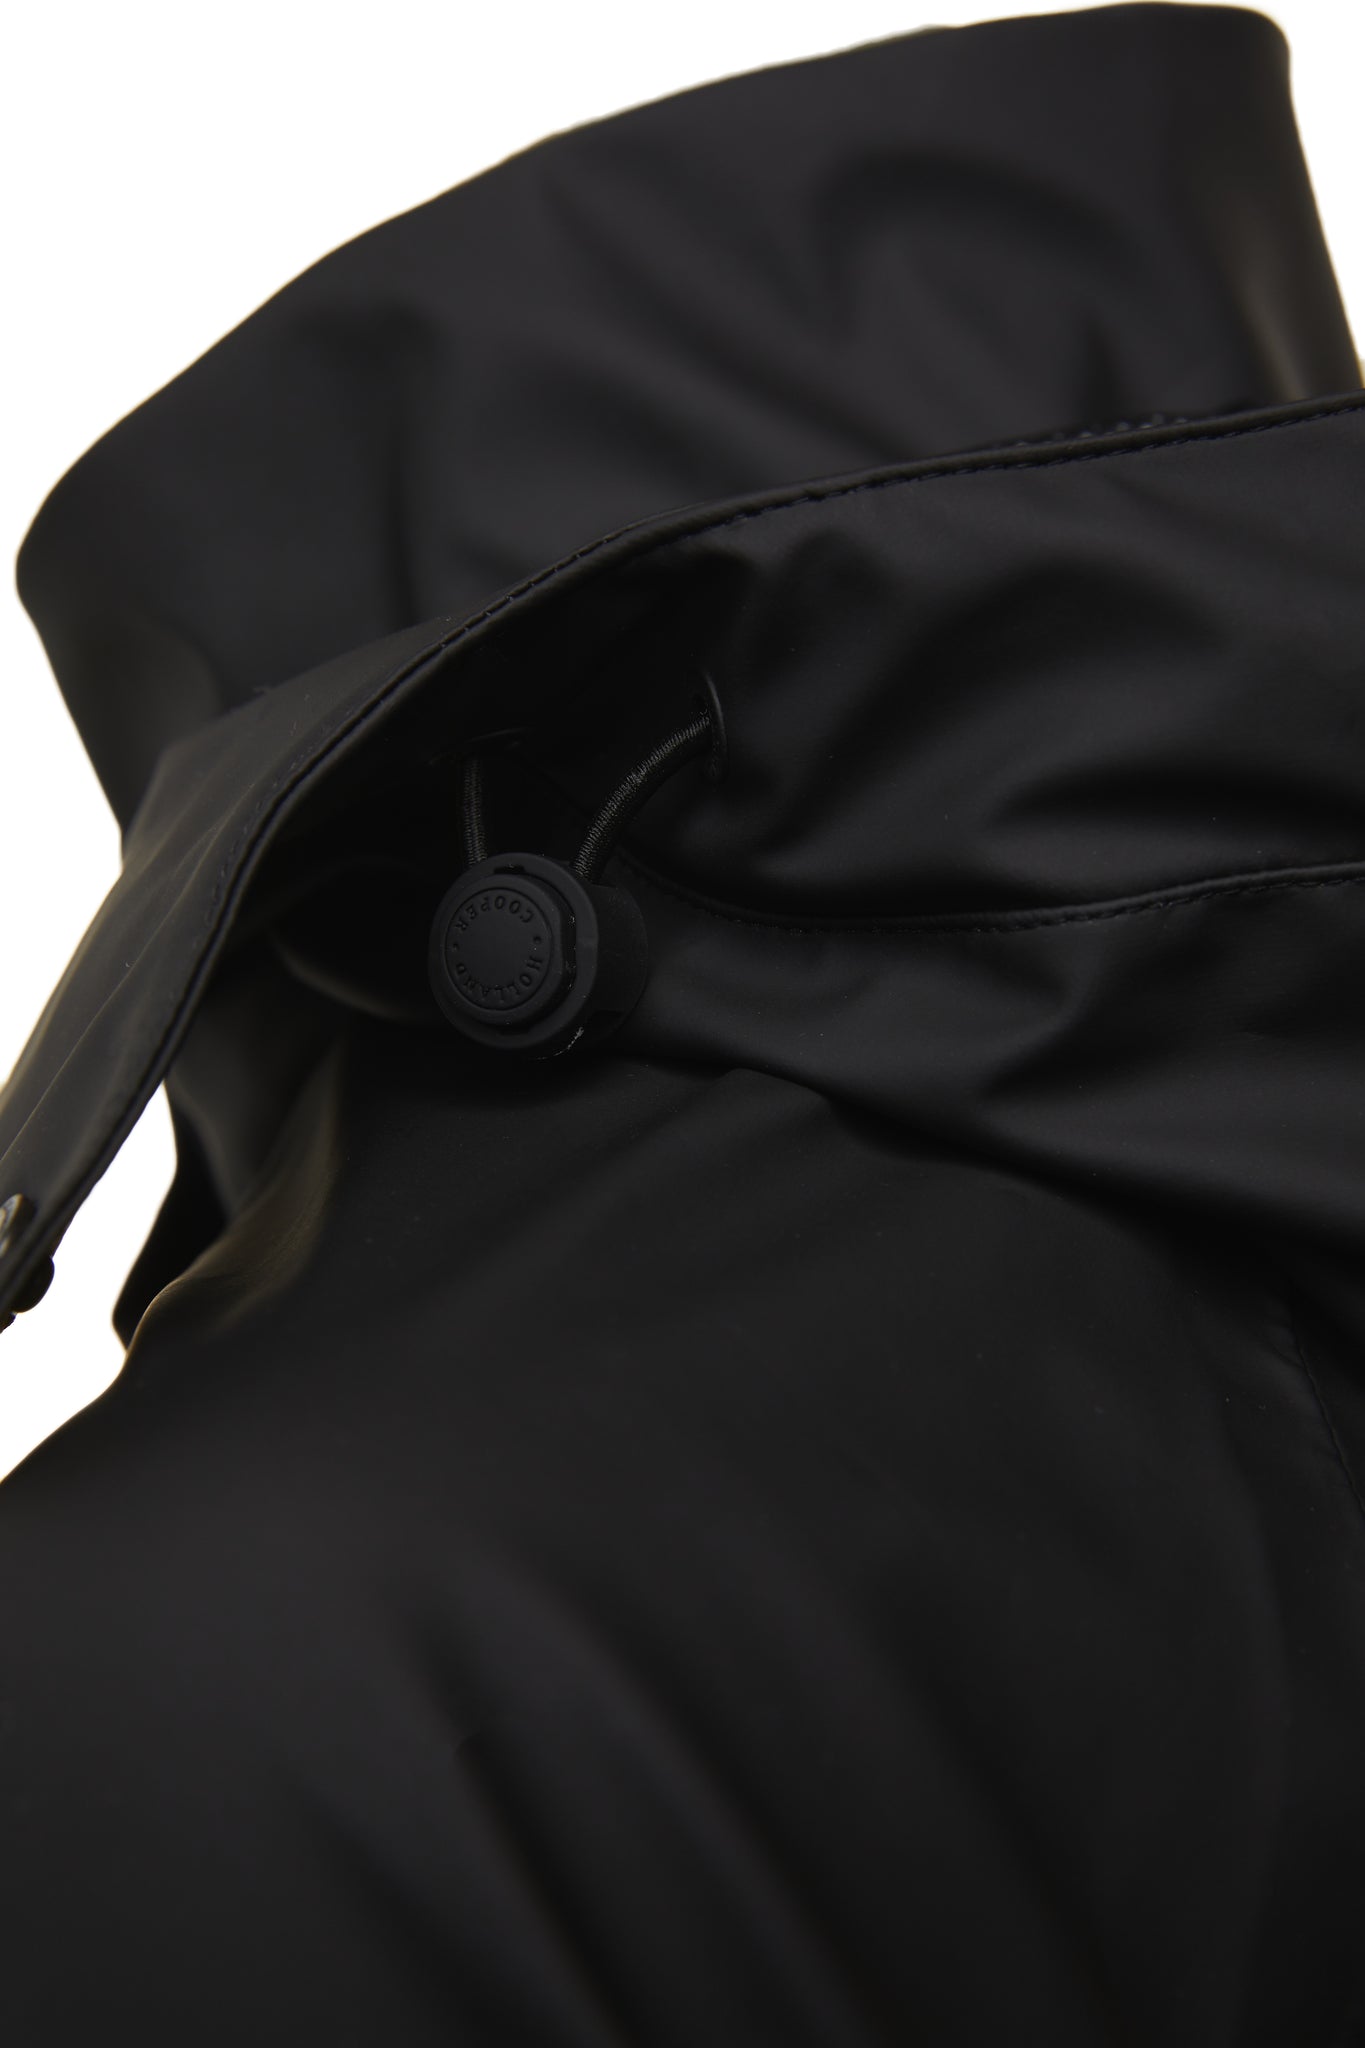 collar detail of womens black hooded rain coat with black hardware 